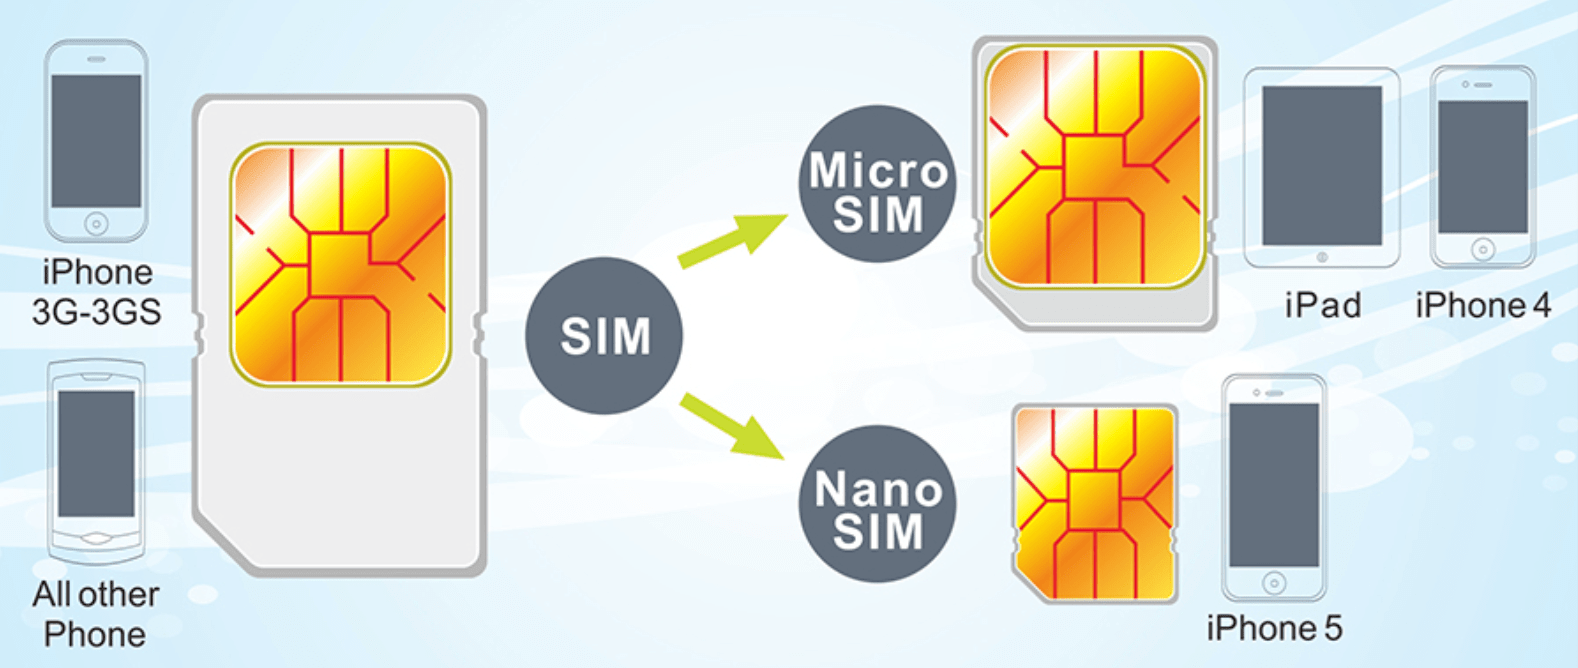 Мини сим микро сим нано сим. Mini SIM Micro SIM отличия. SIM Mini Micro Nano. Micro-SIM И Nano-SIM карты отличия.